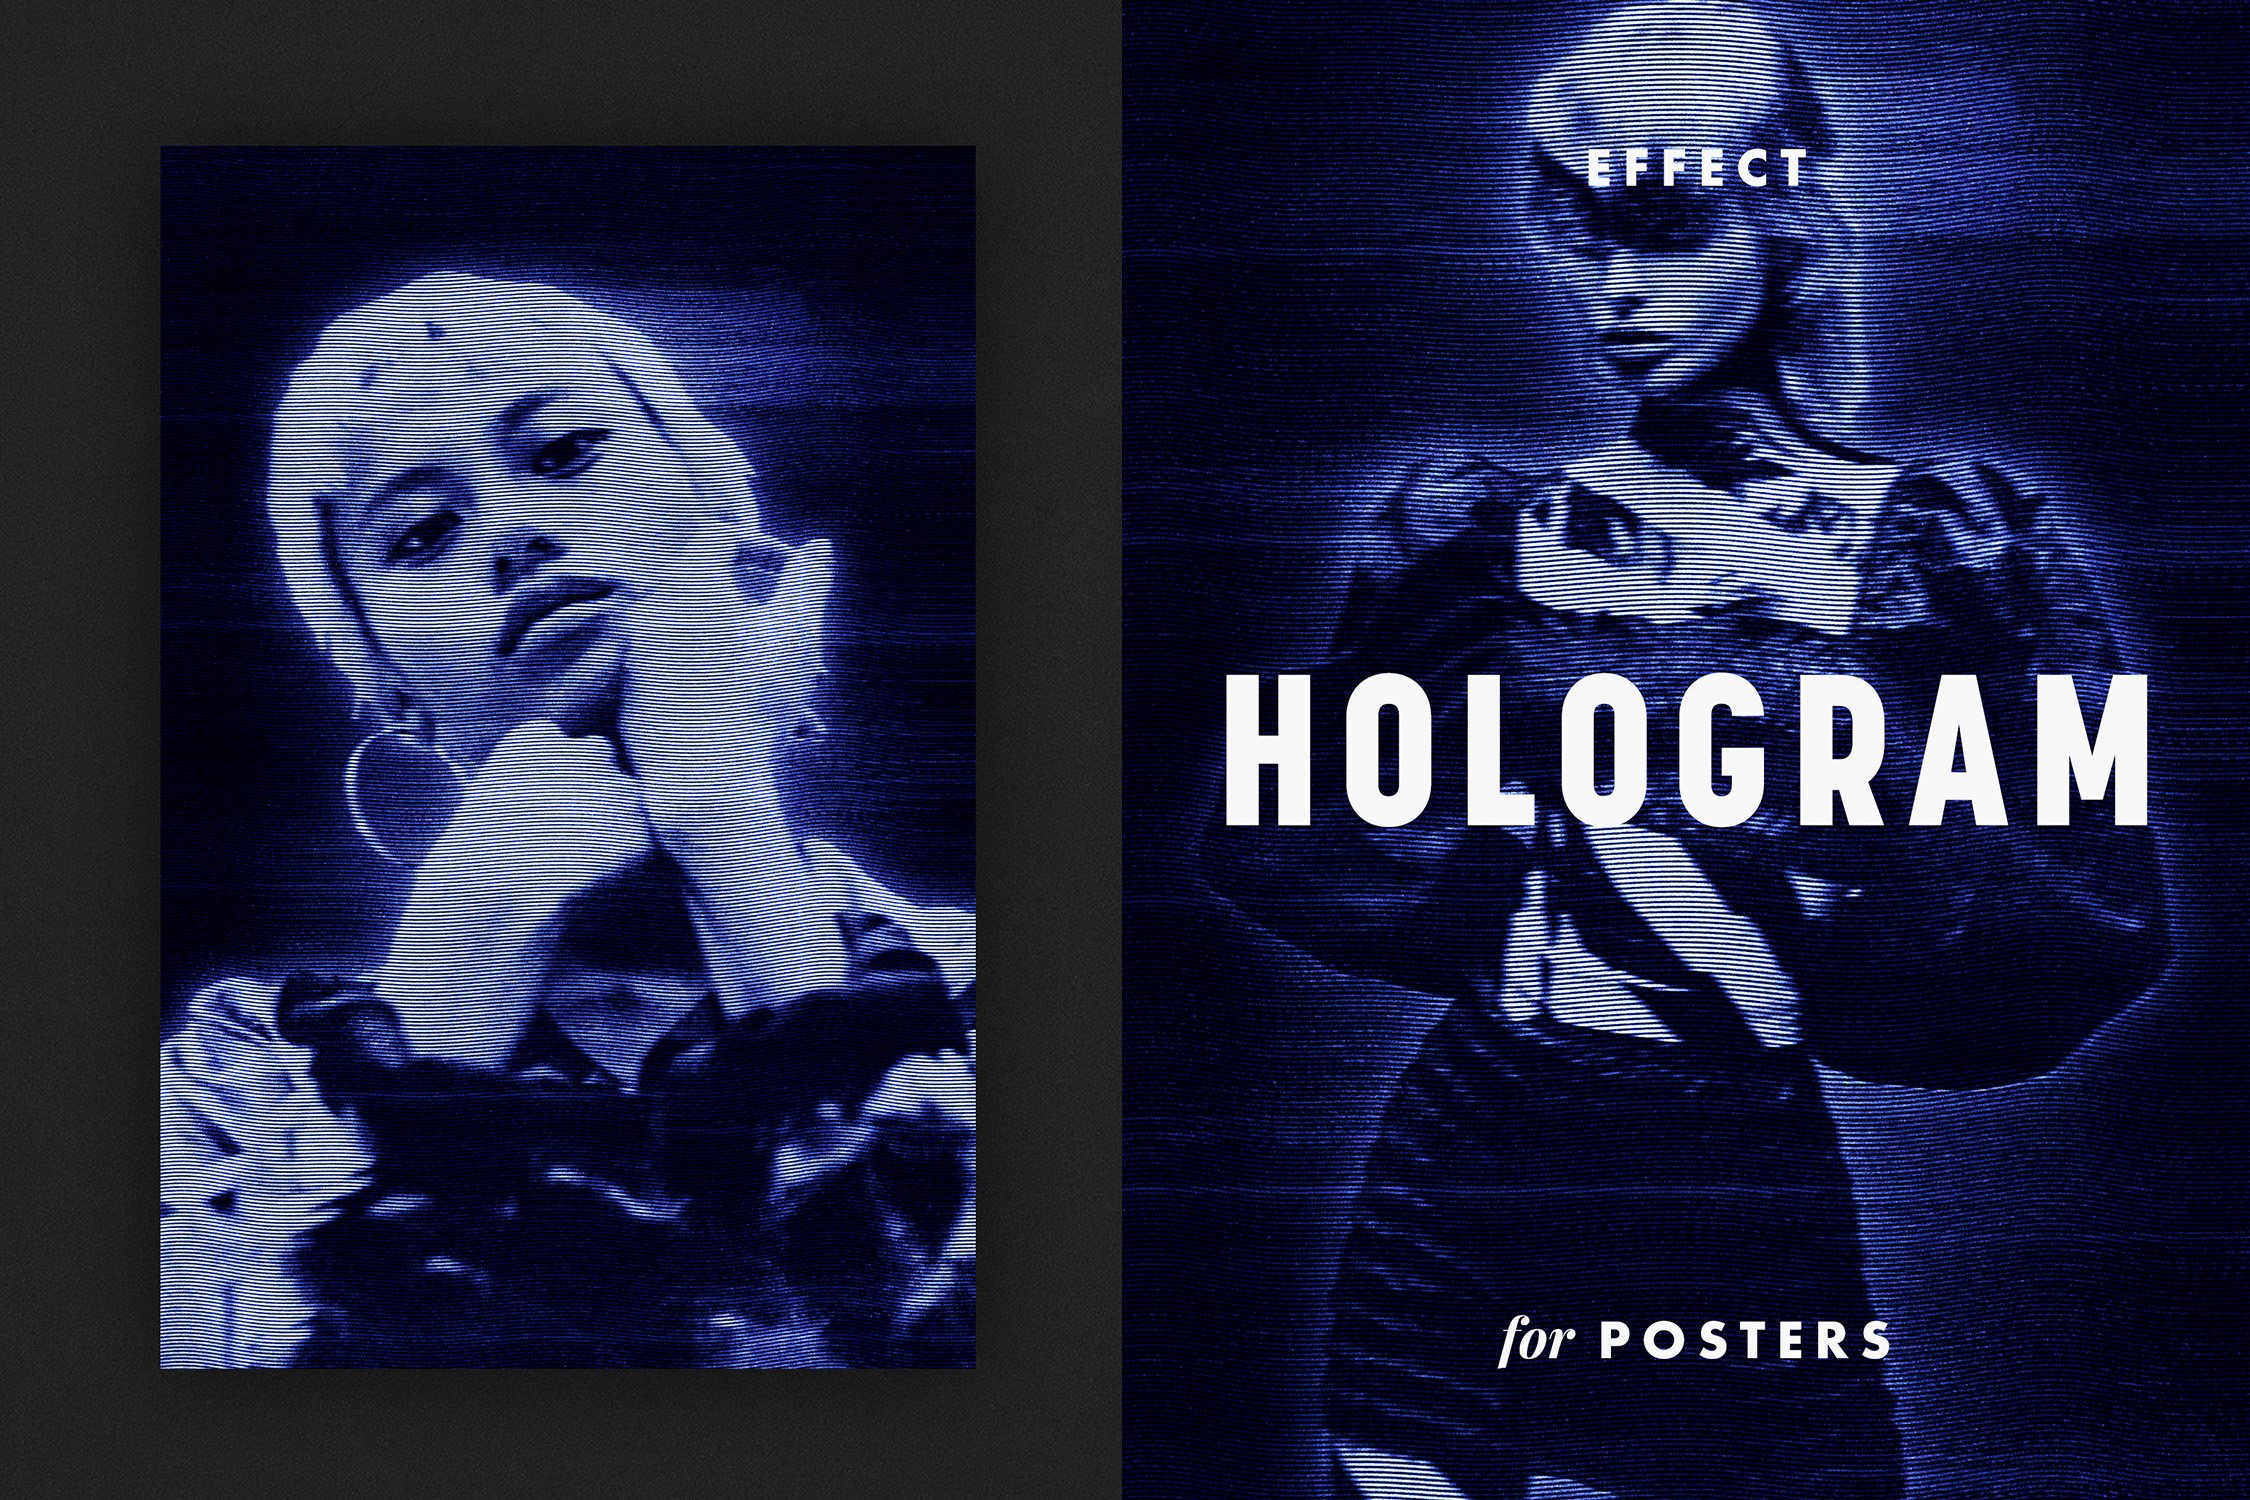 Hologram Effect for Posterscover image.